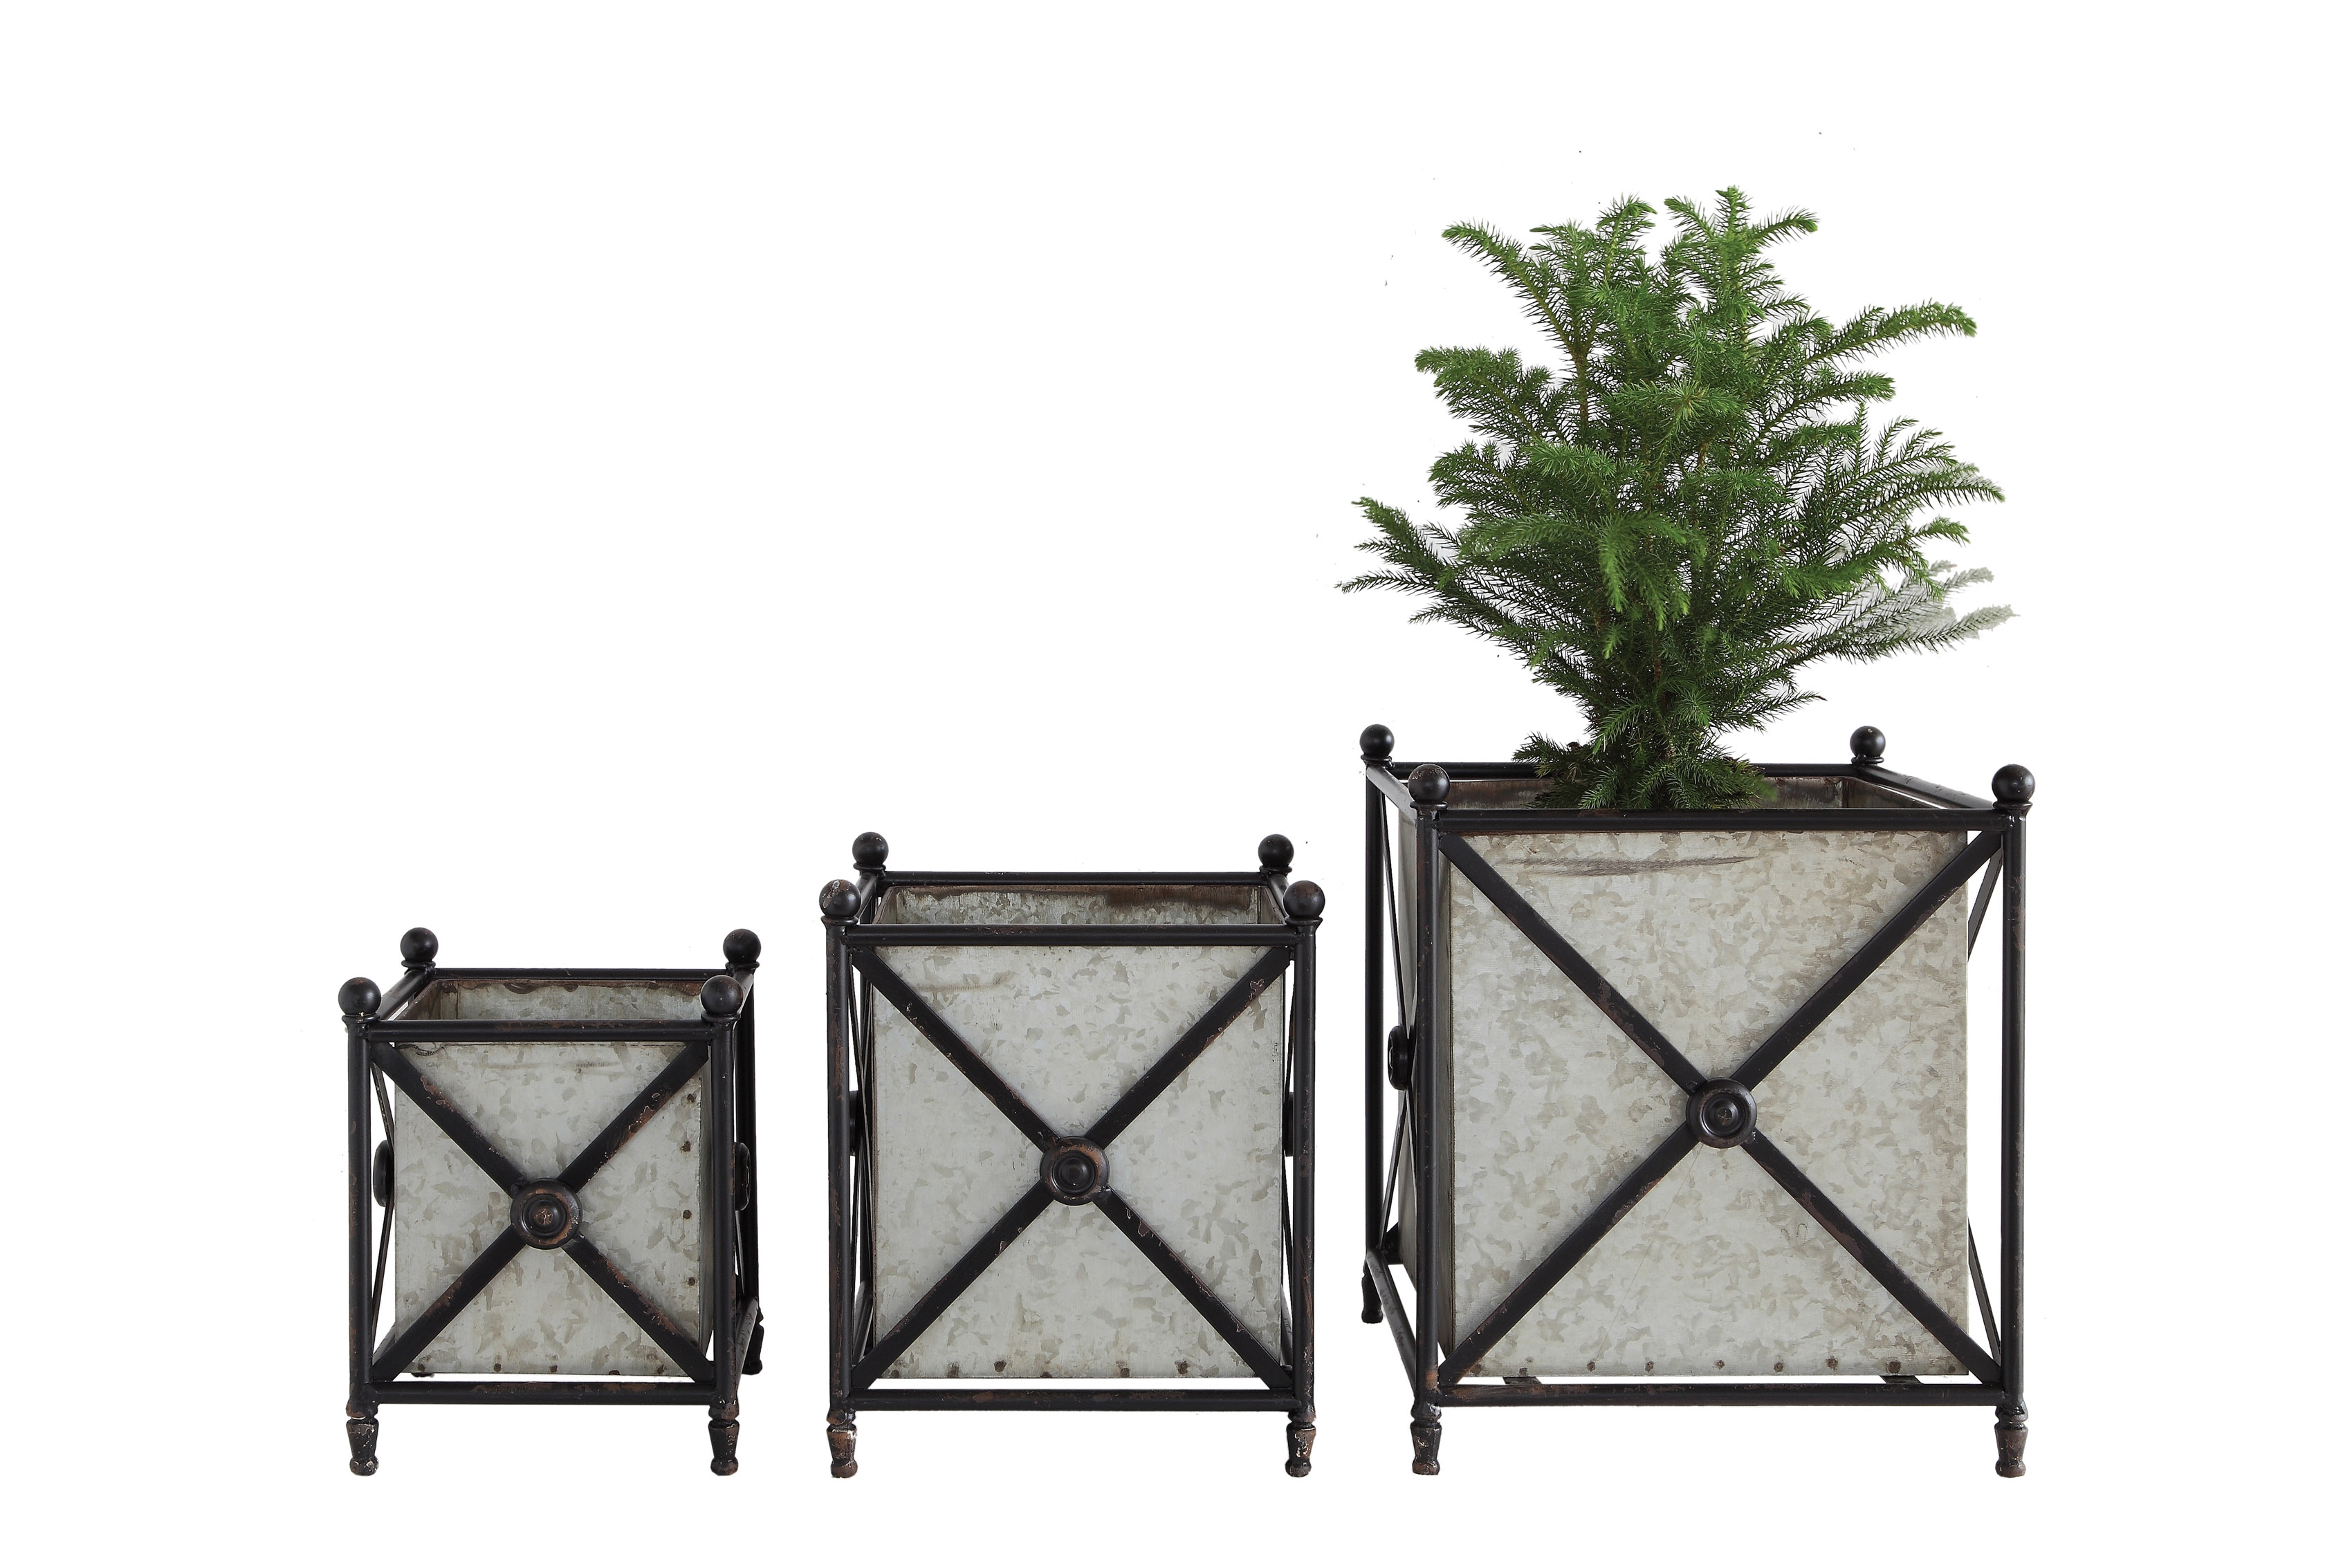 Square Grey Metal Flower Boxes Inside Decorative Black Frame (Set of 3 Sizes) - Image 0